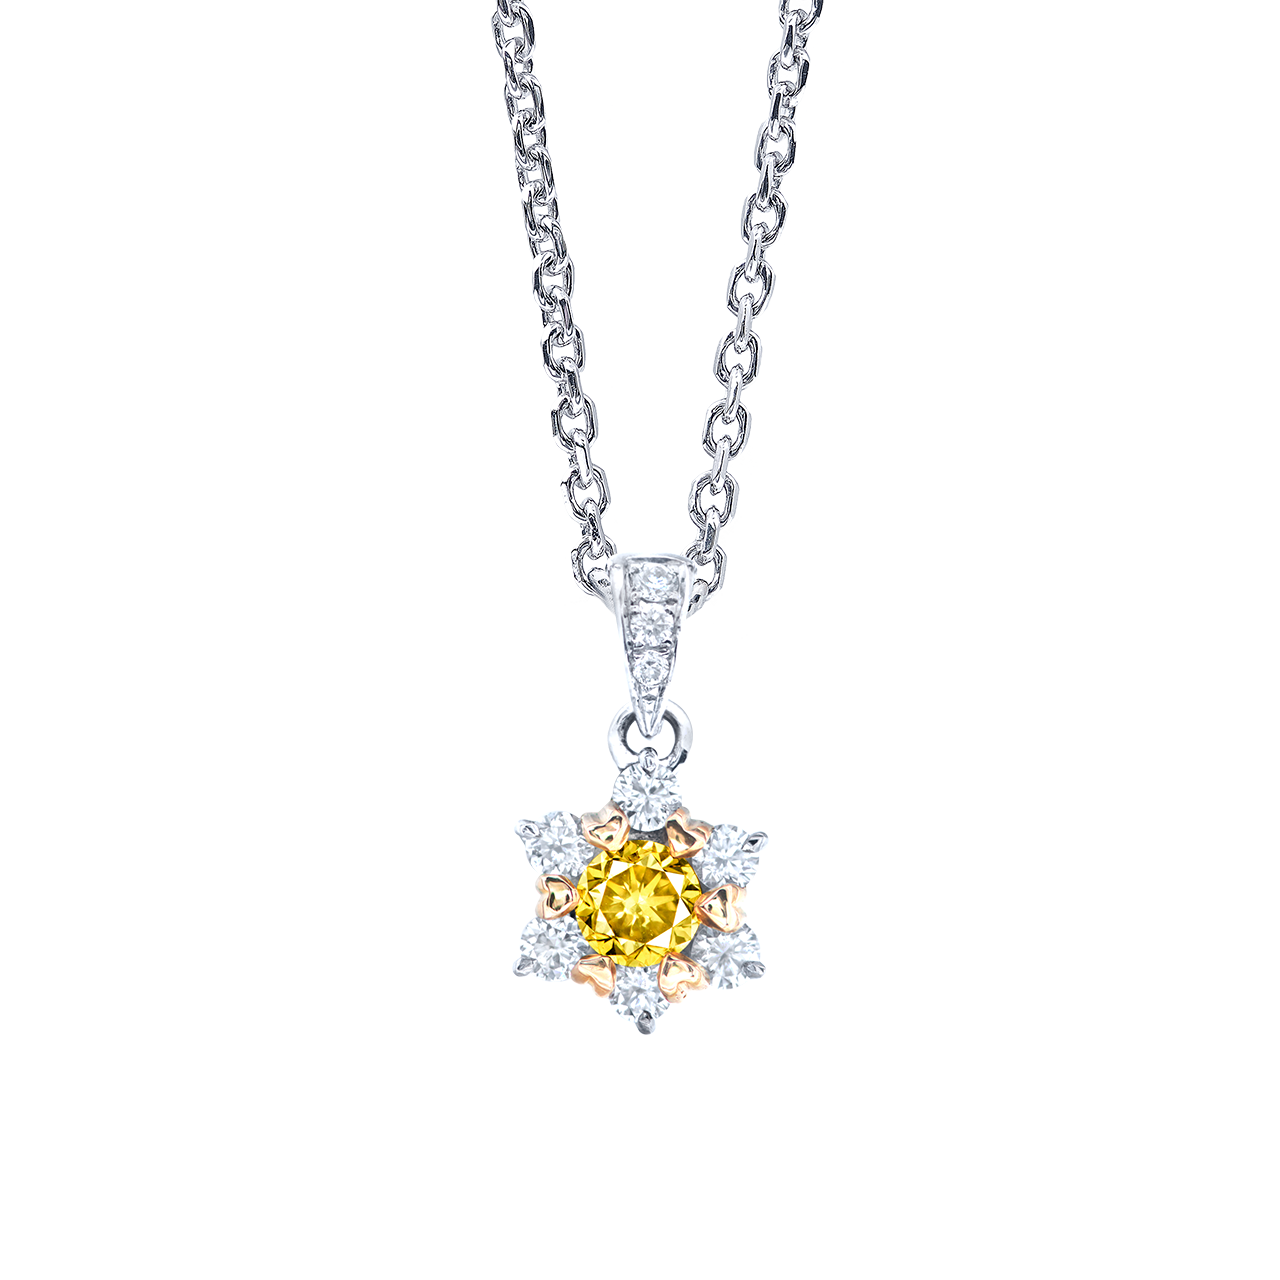 GIA  黃鑽墜鍊 0.23 克拉
Fancy Deep Yellow Colored 
Diamond and Diamond Necklace